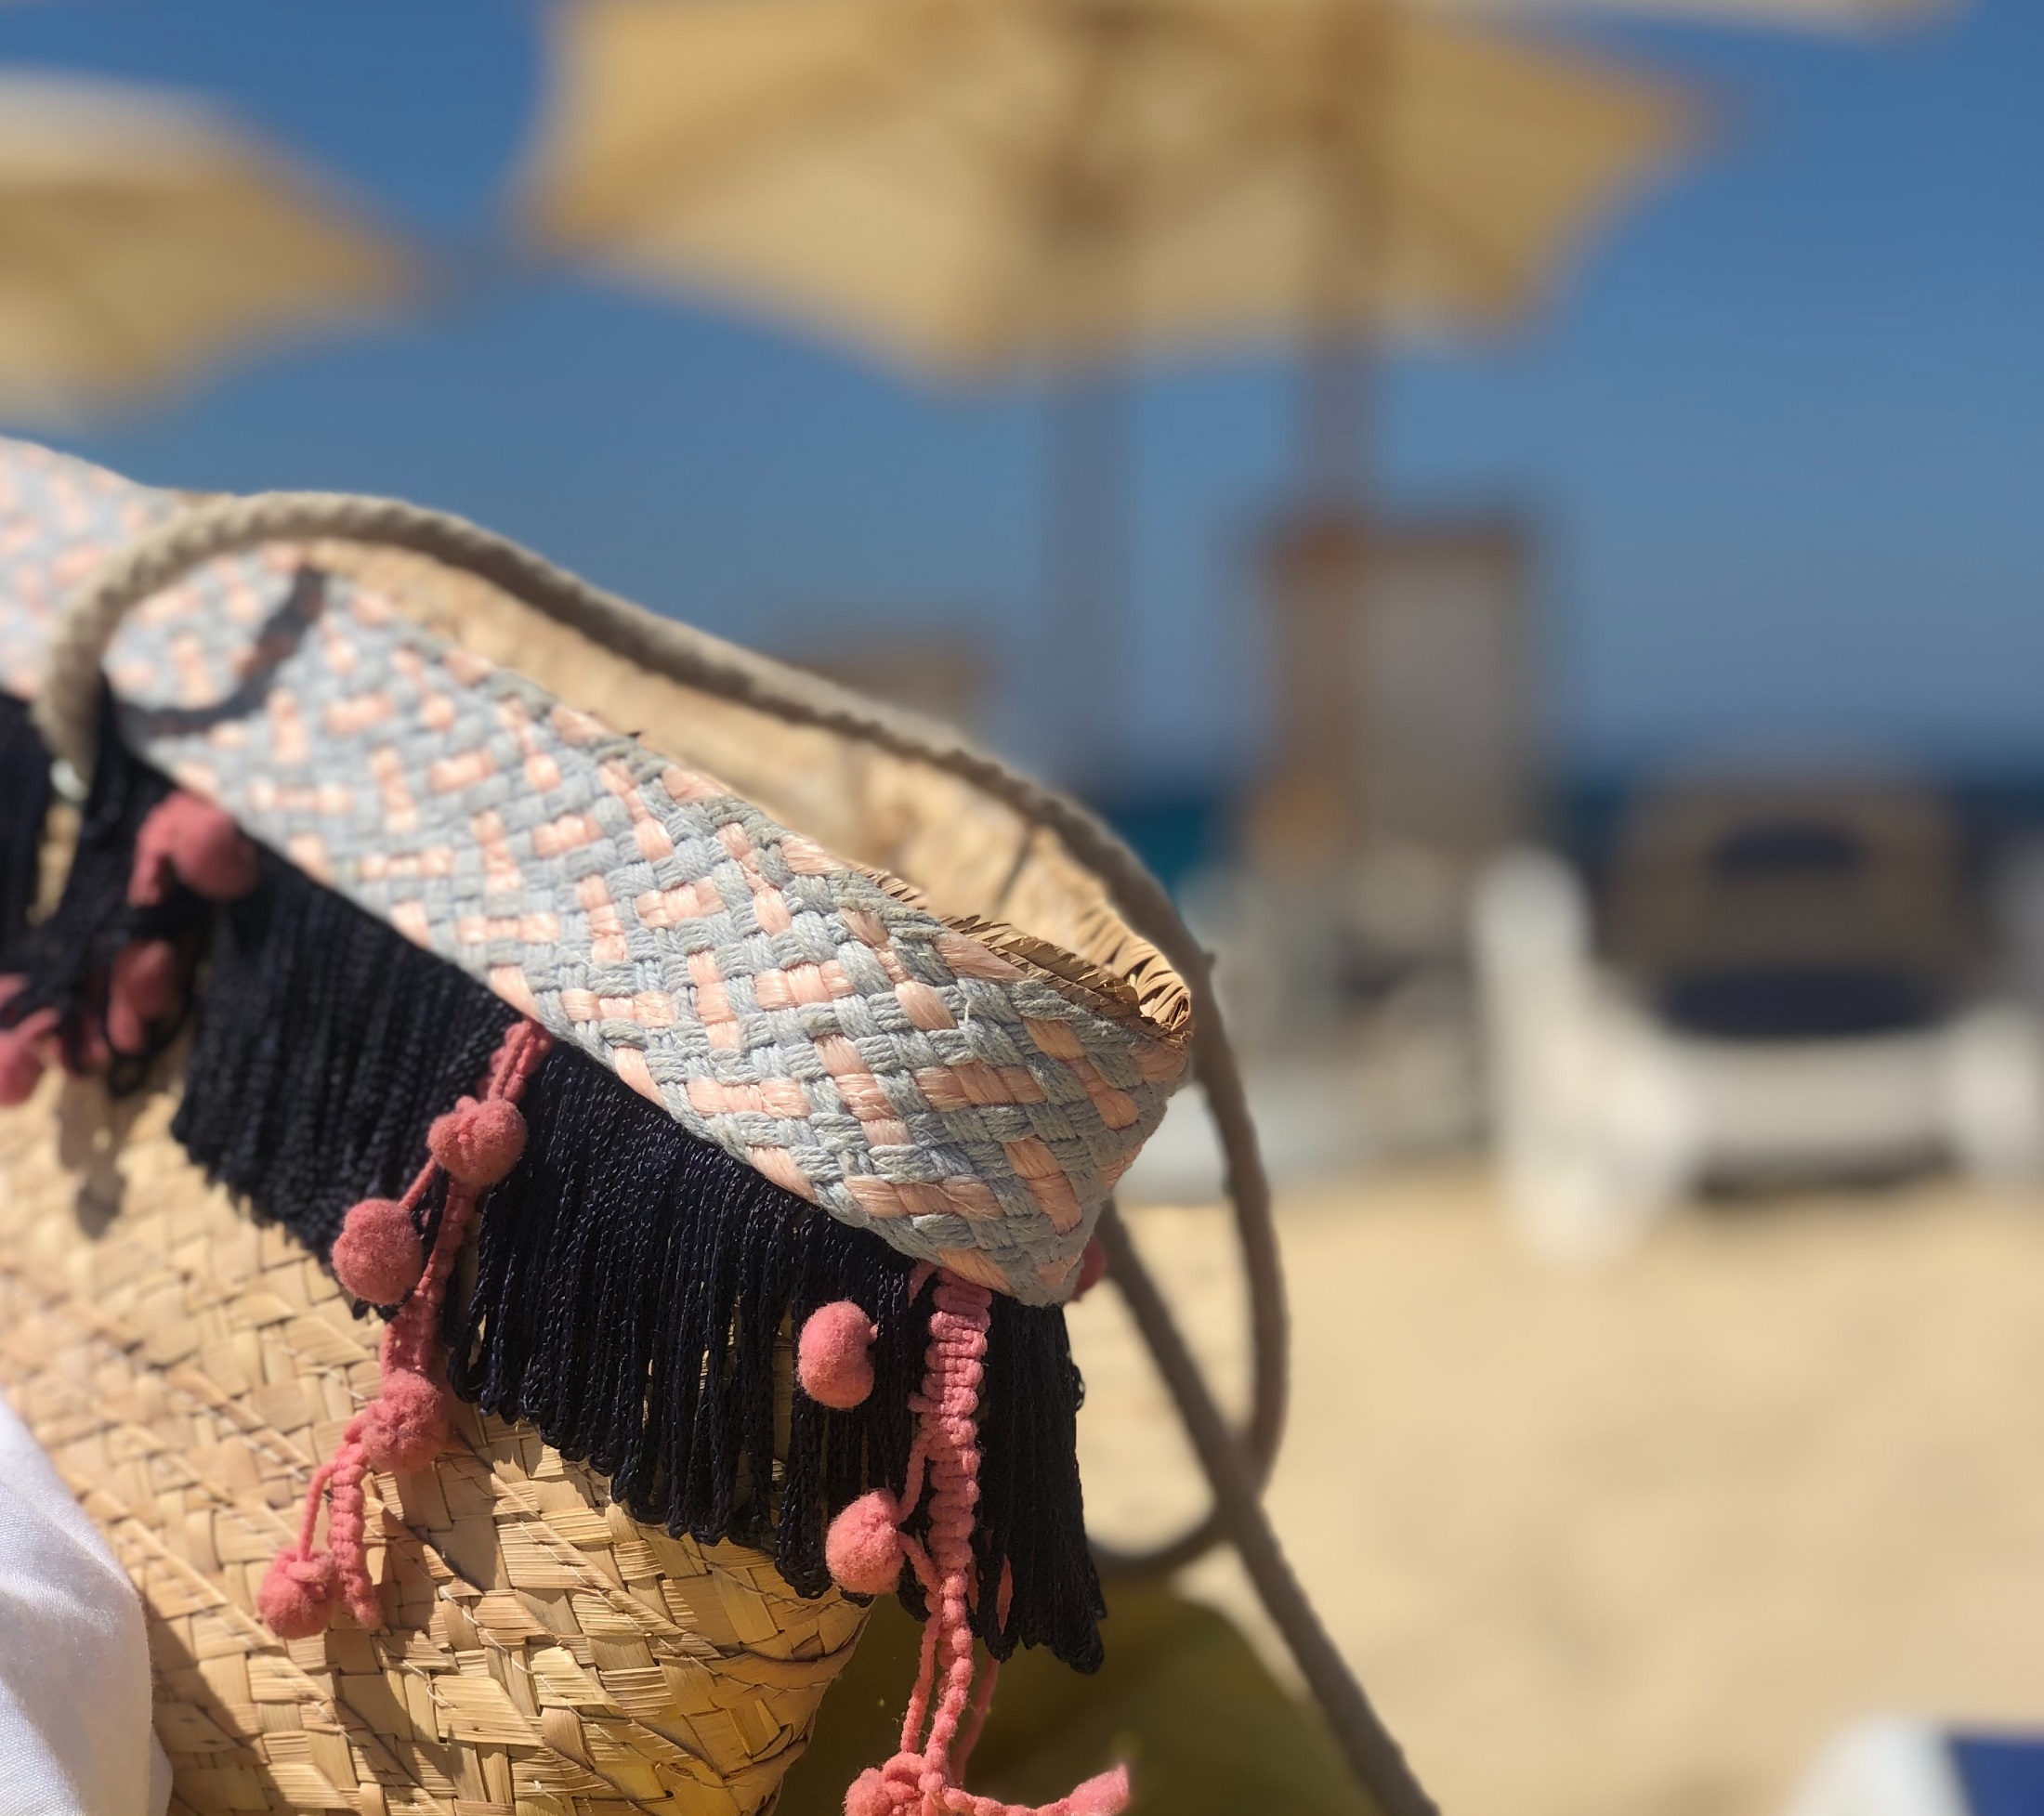 How to make a beach bag yourself?